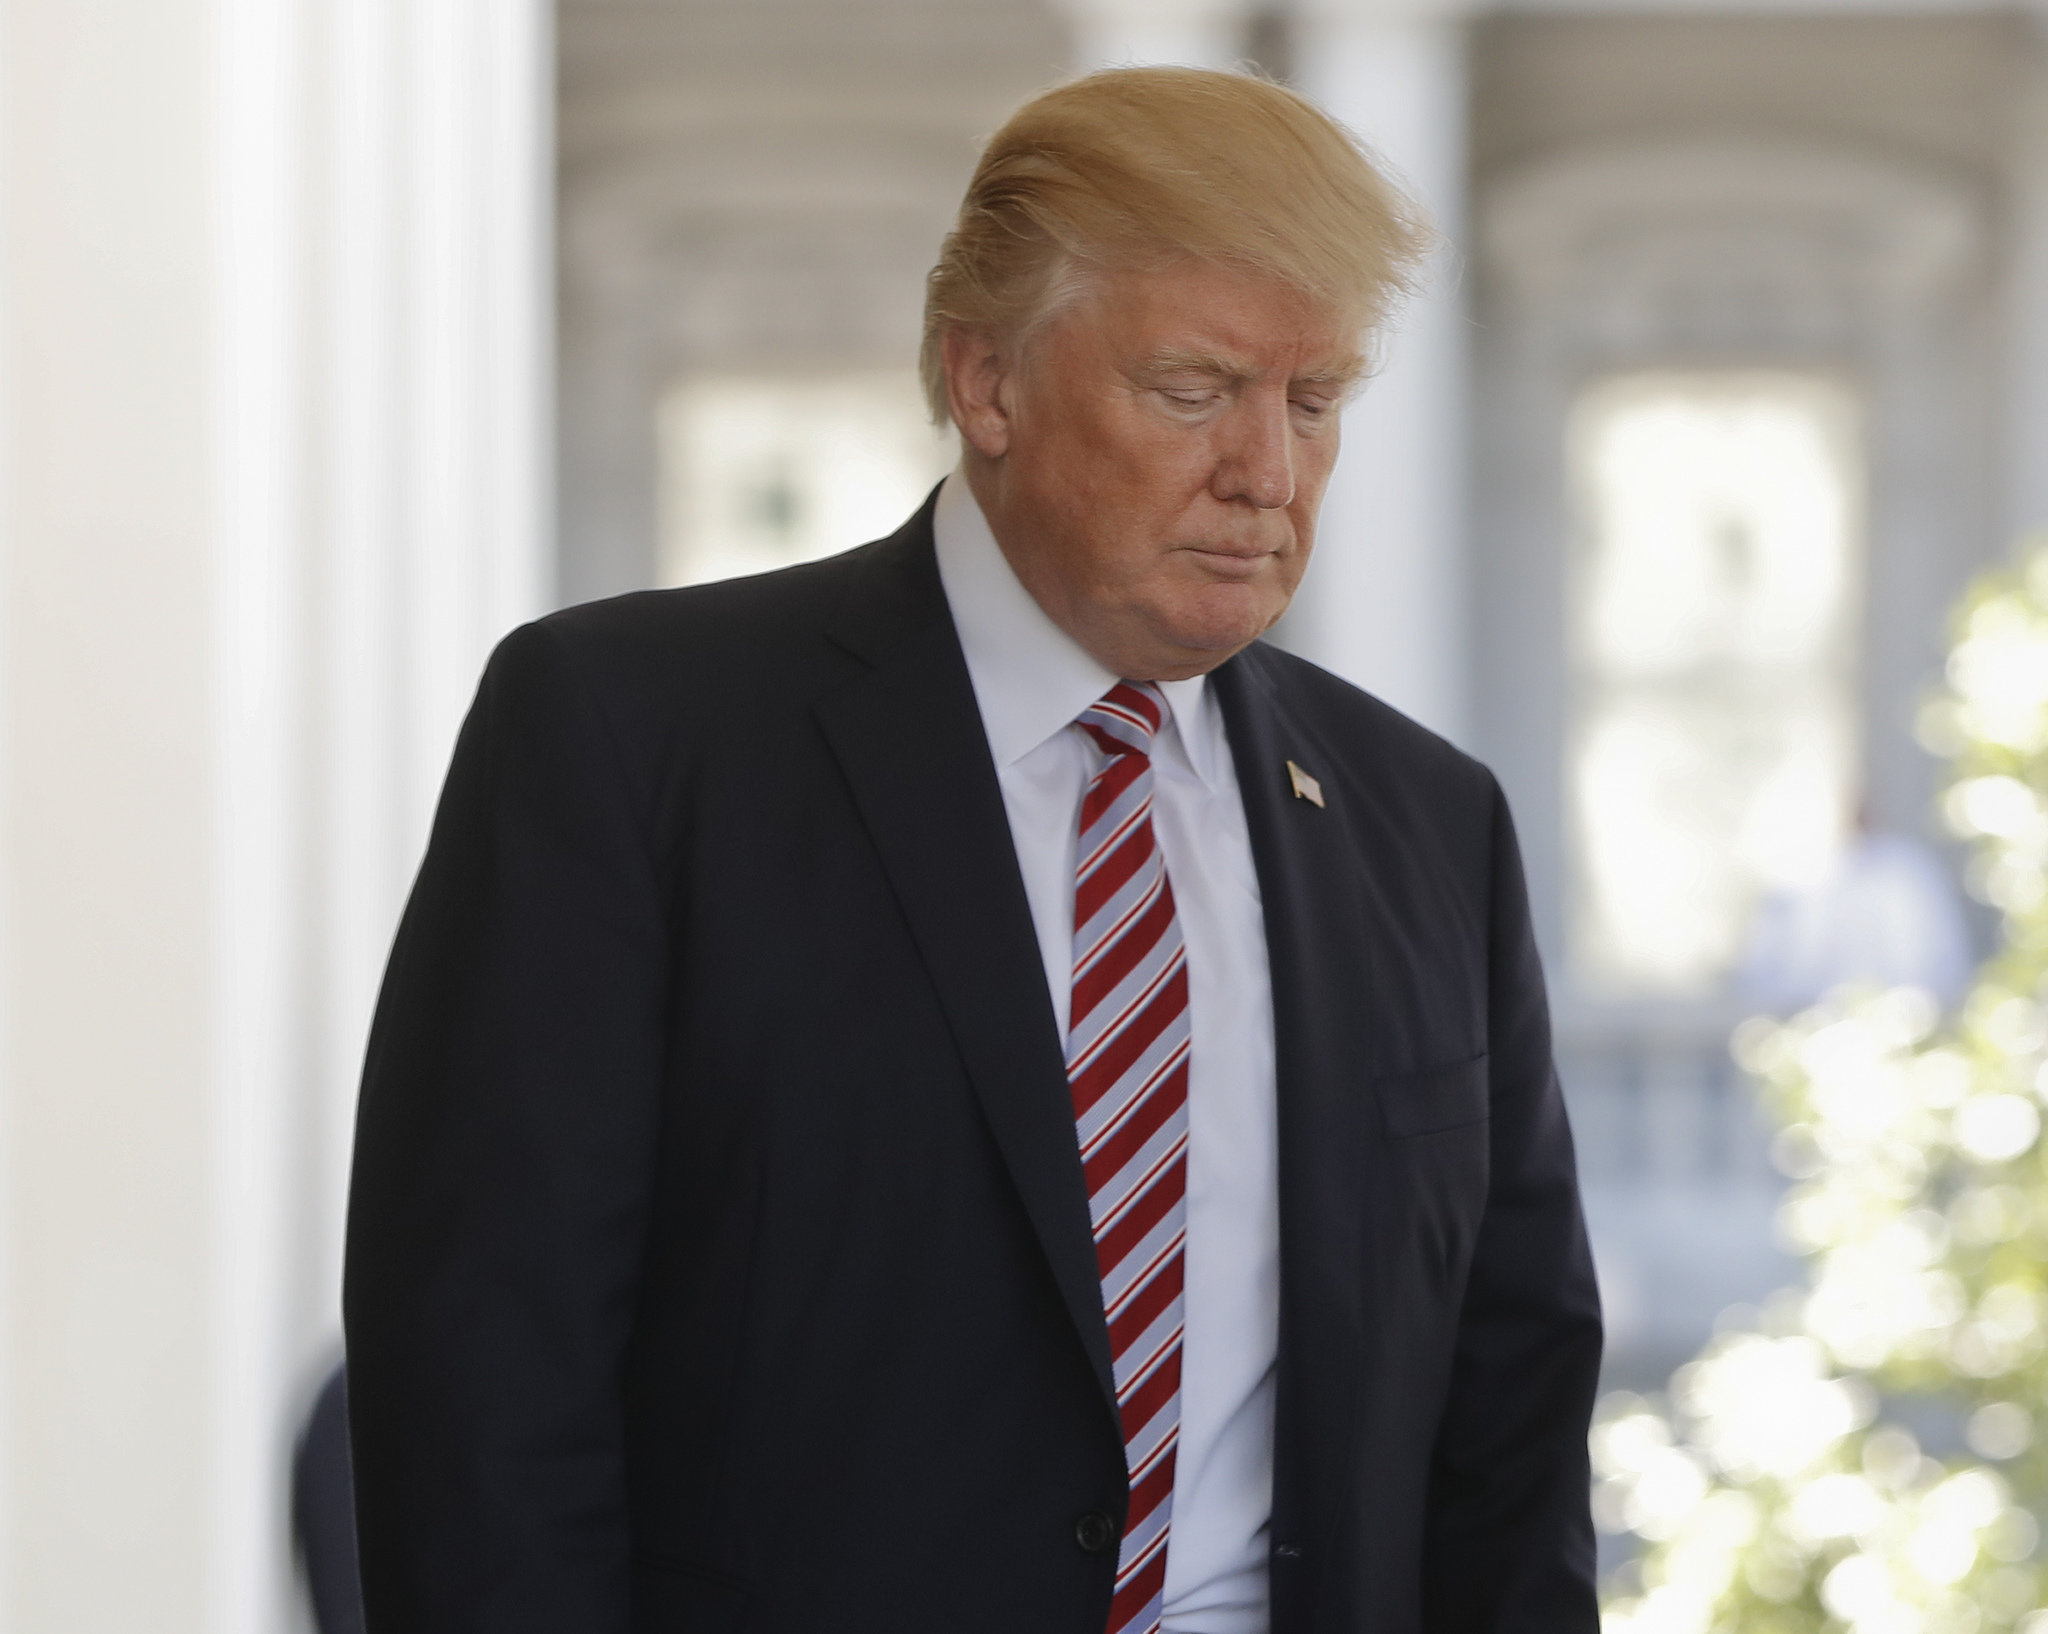 Michigan Democrats urge Trump to work closely with Congress on NAFTA renegotiation